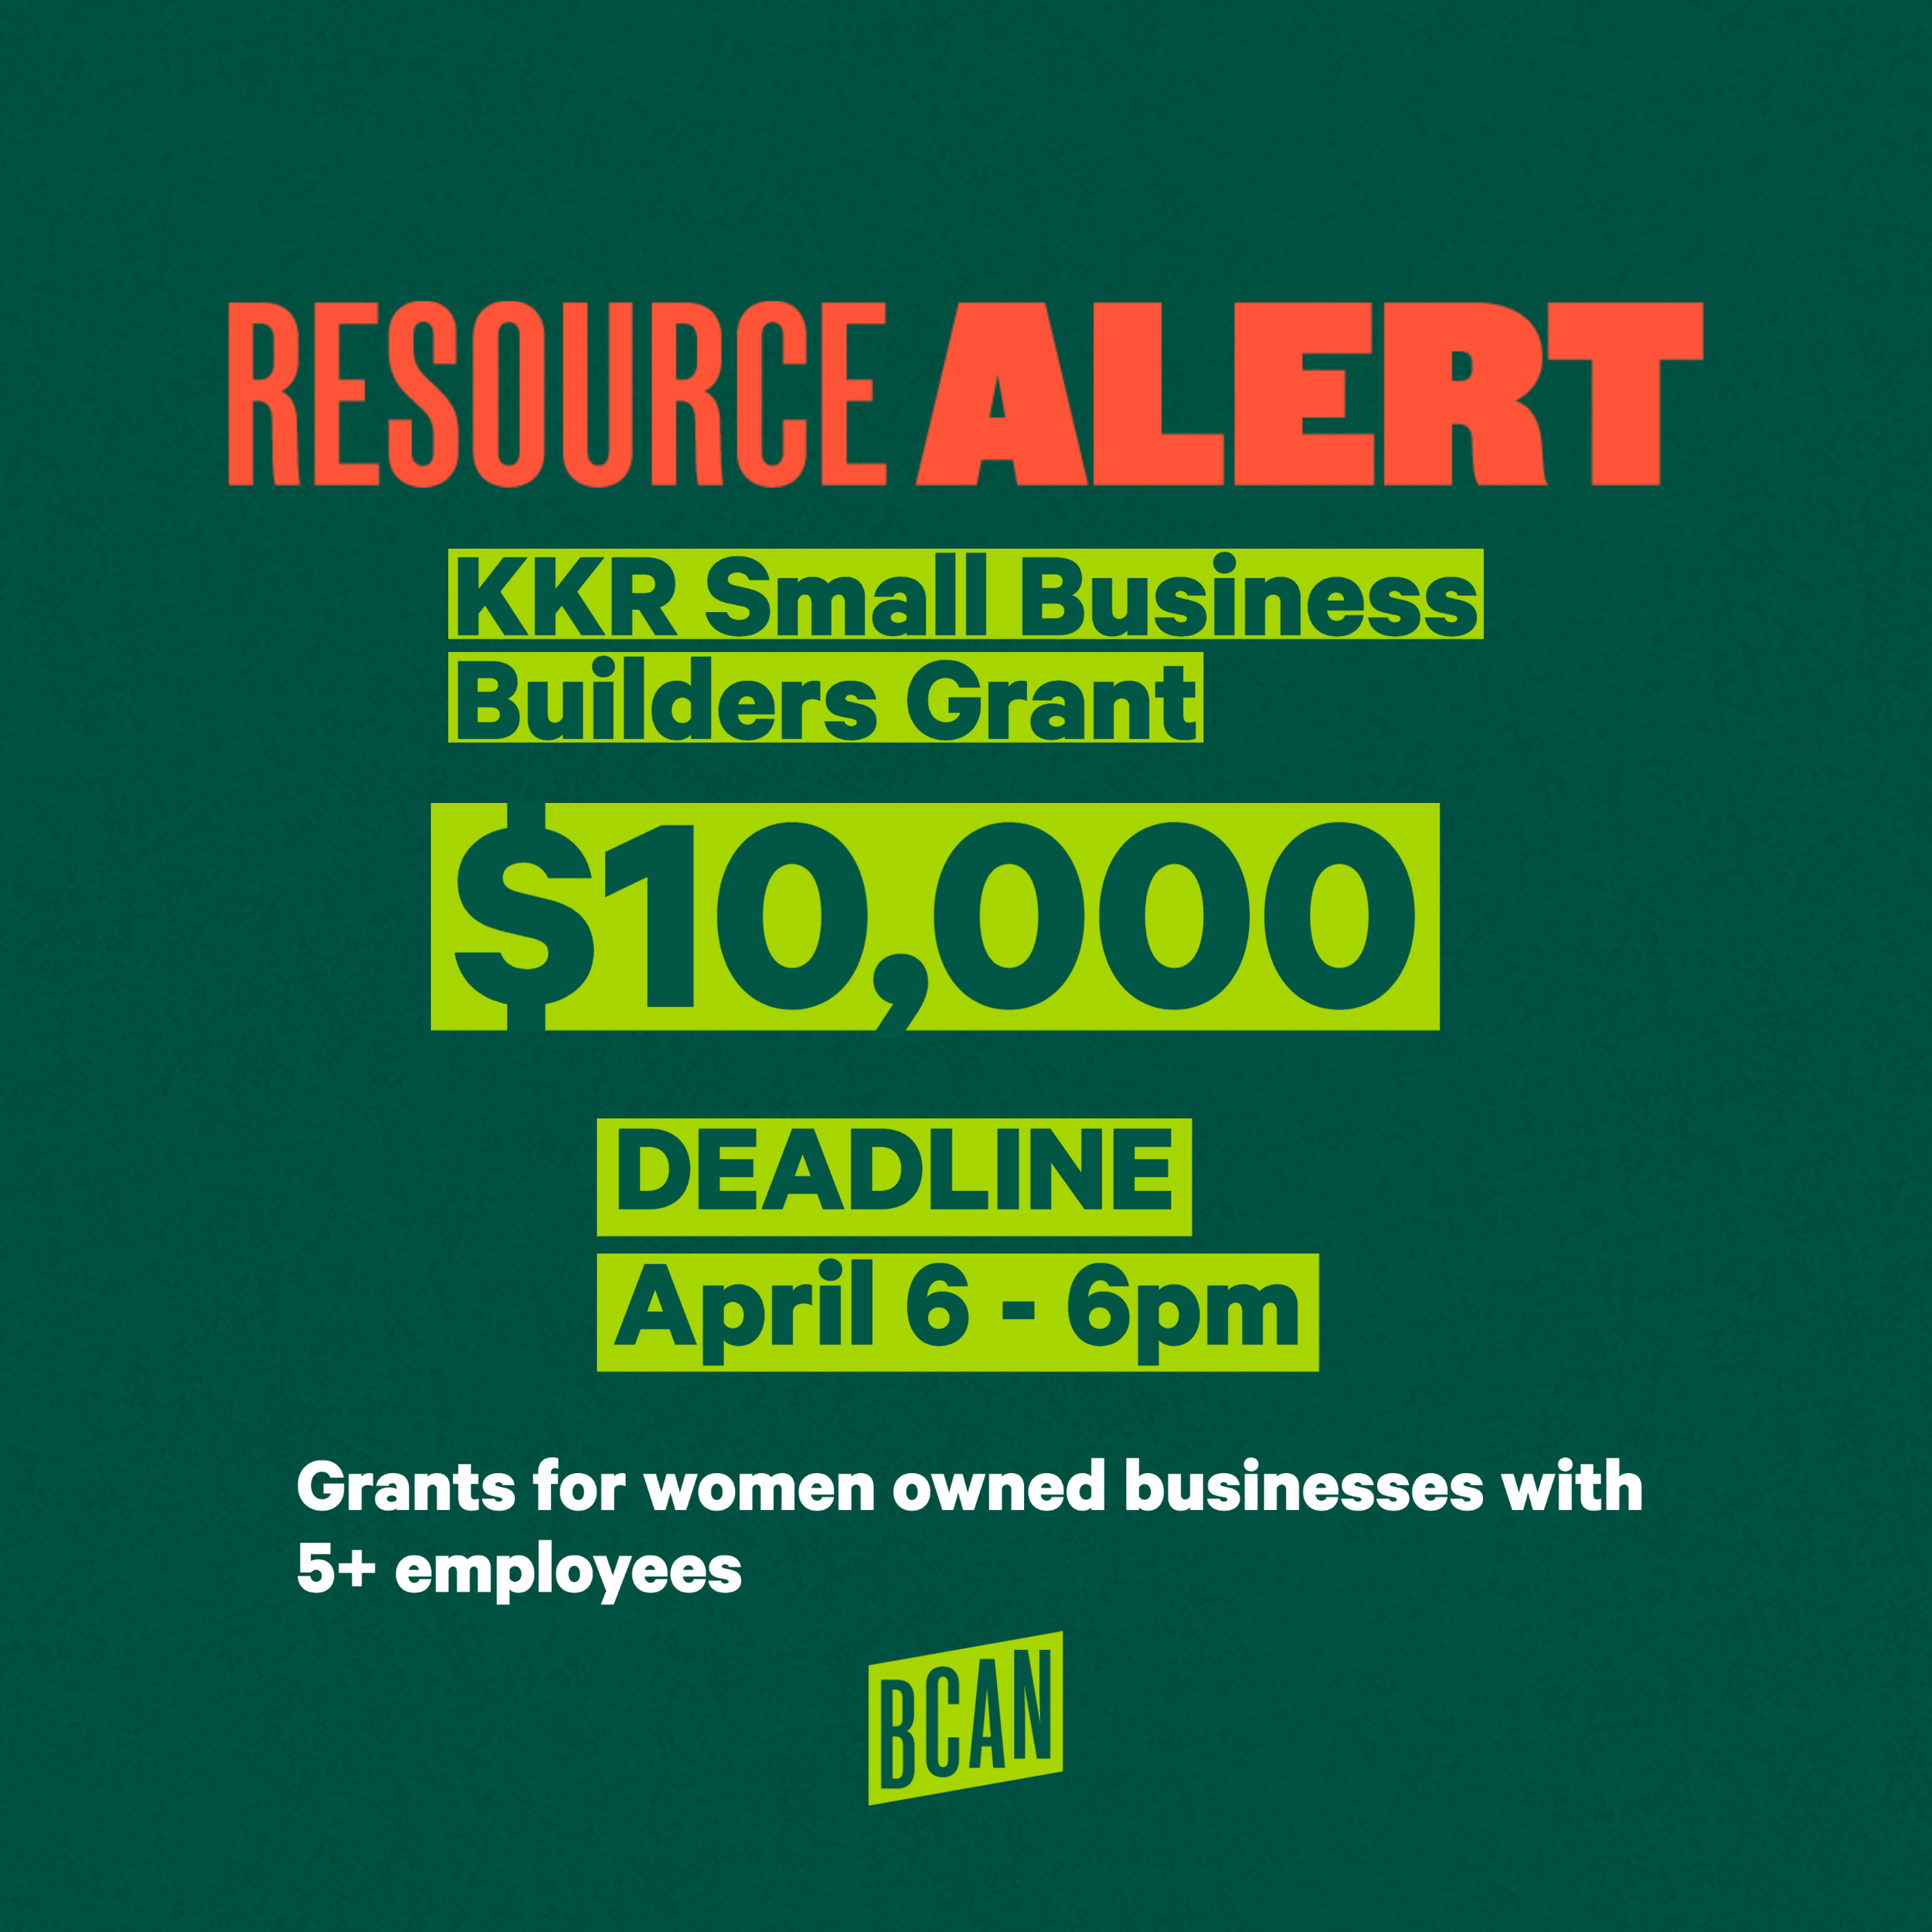 KKR Small Business Builders Grant